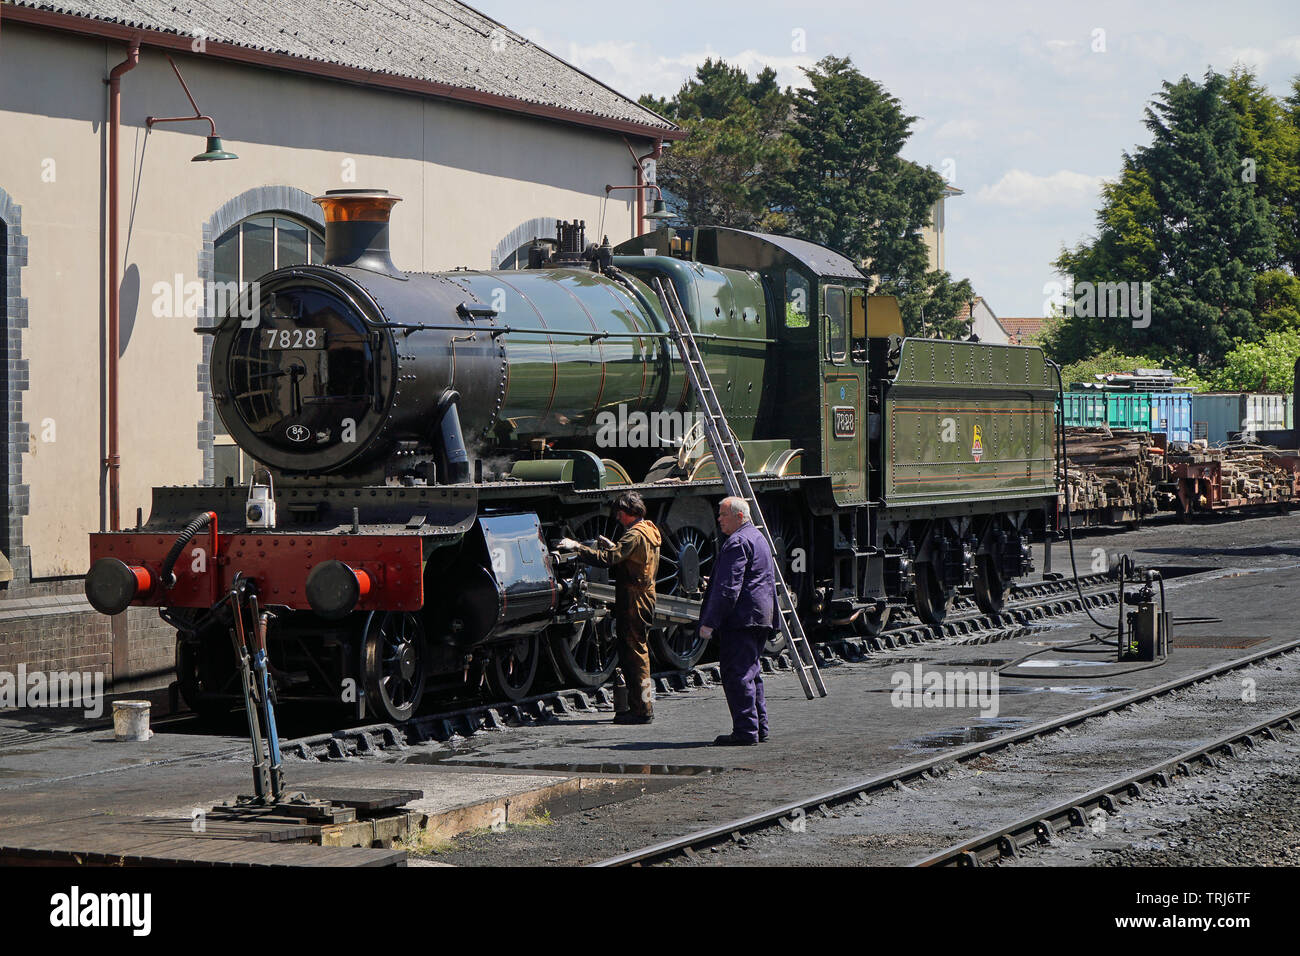 Volunteers working on the Odney Manor vintage steam locomotive at West Somerset Railway Stock Photo